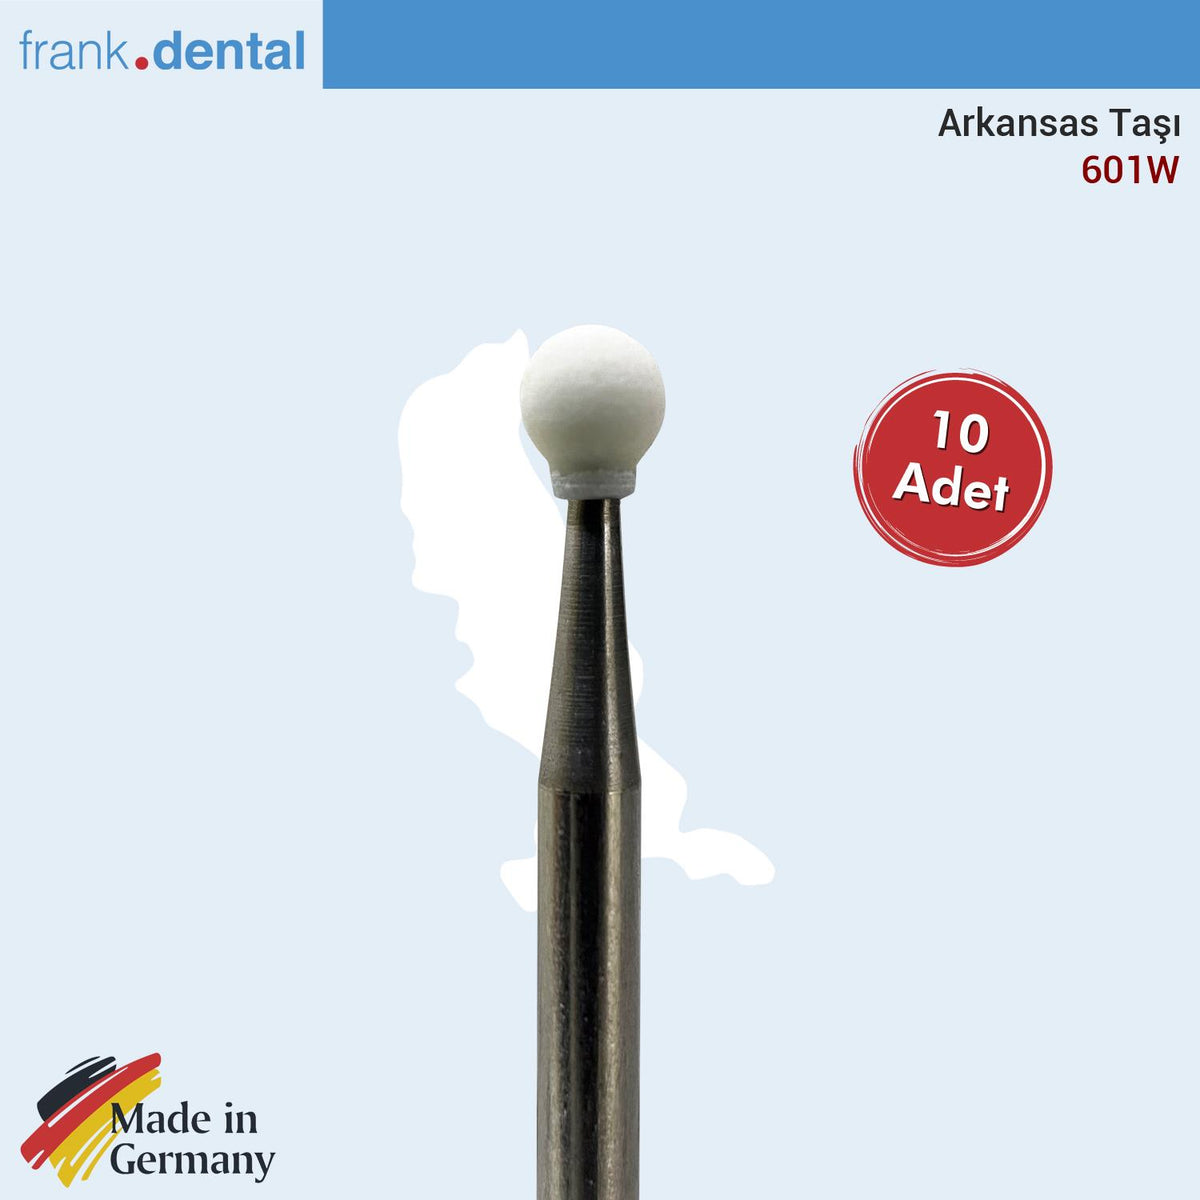 DentrealStore - Frank Dental Arkansas Stone 601W - 10 Pcs - Composite and Ceramic Abrasive